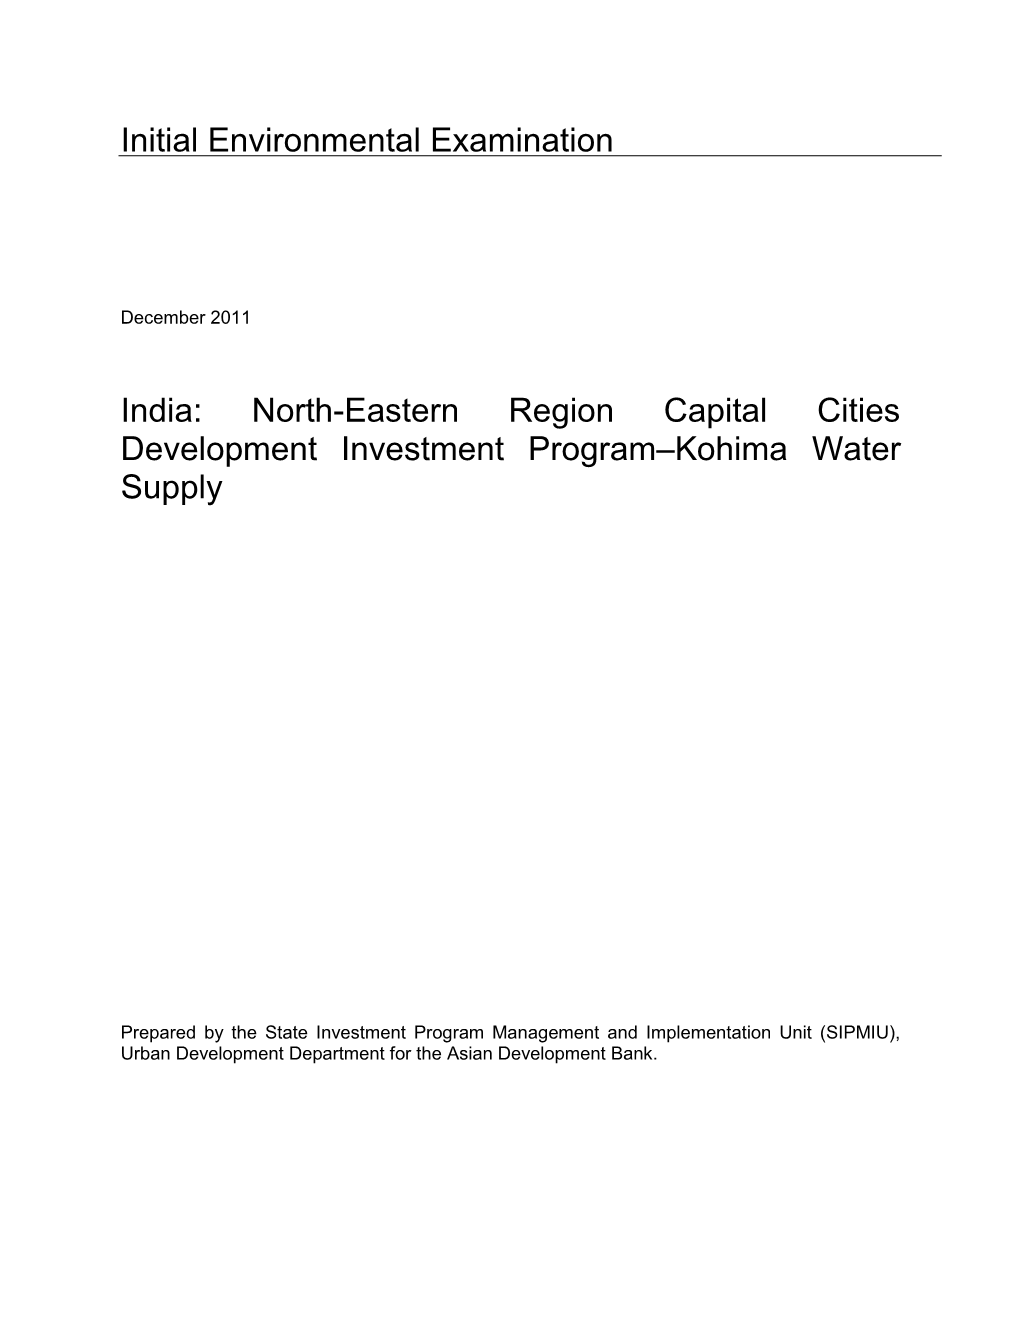 IEE: India: North-Eastern Region Capital Cities Development